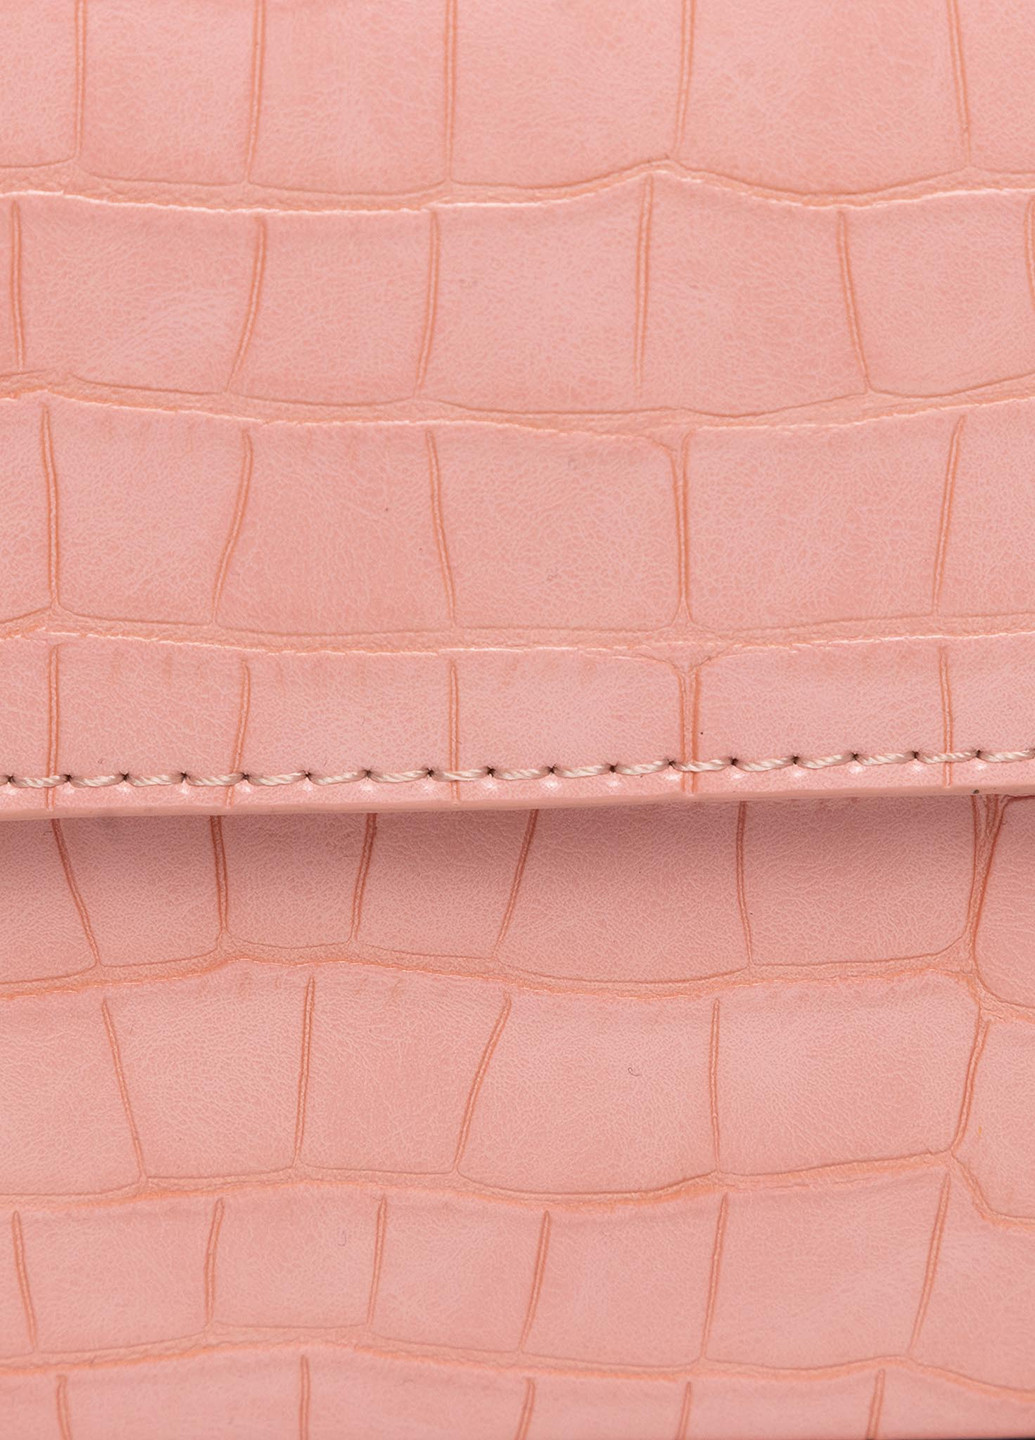 Сумка з ремінцем DeeZee RX5073 кросс боди однотонная светло-розовая кэжуал